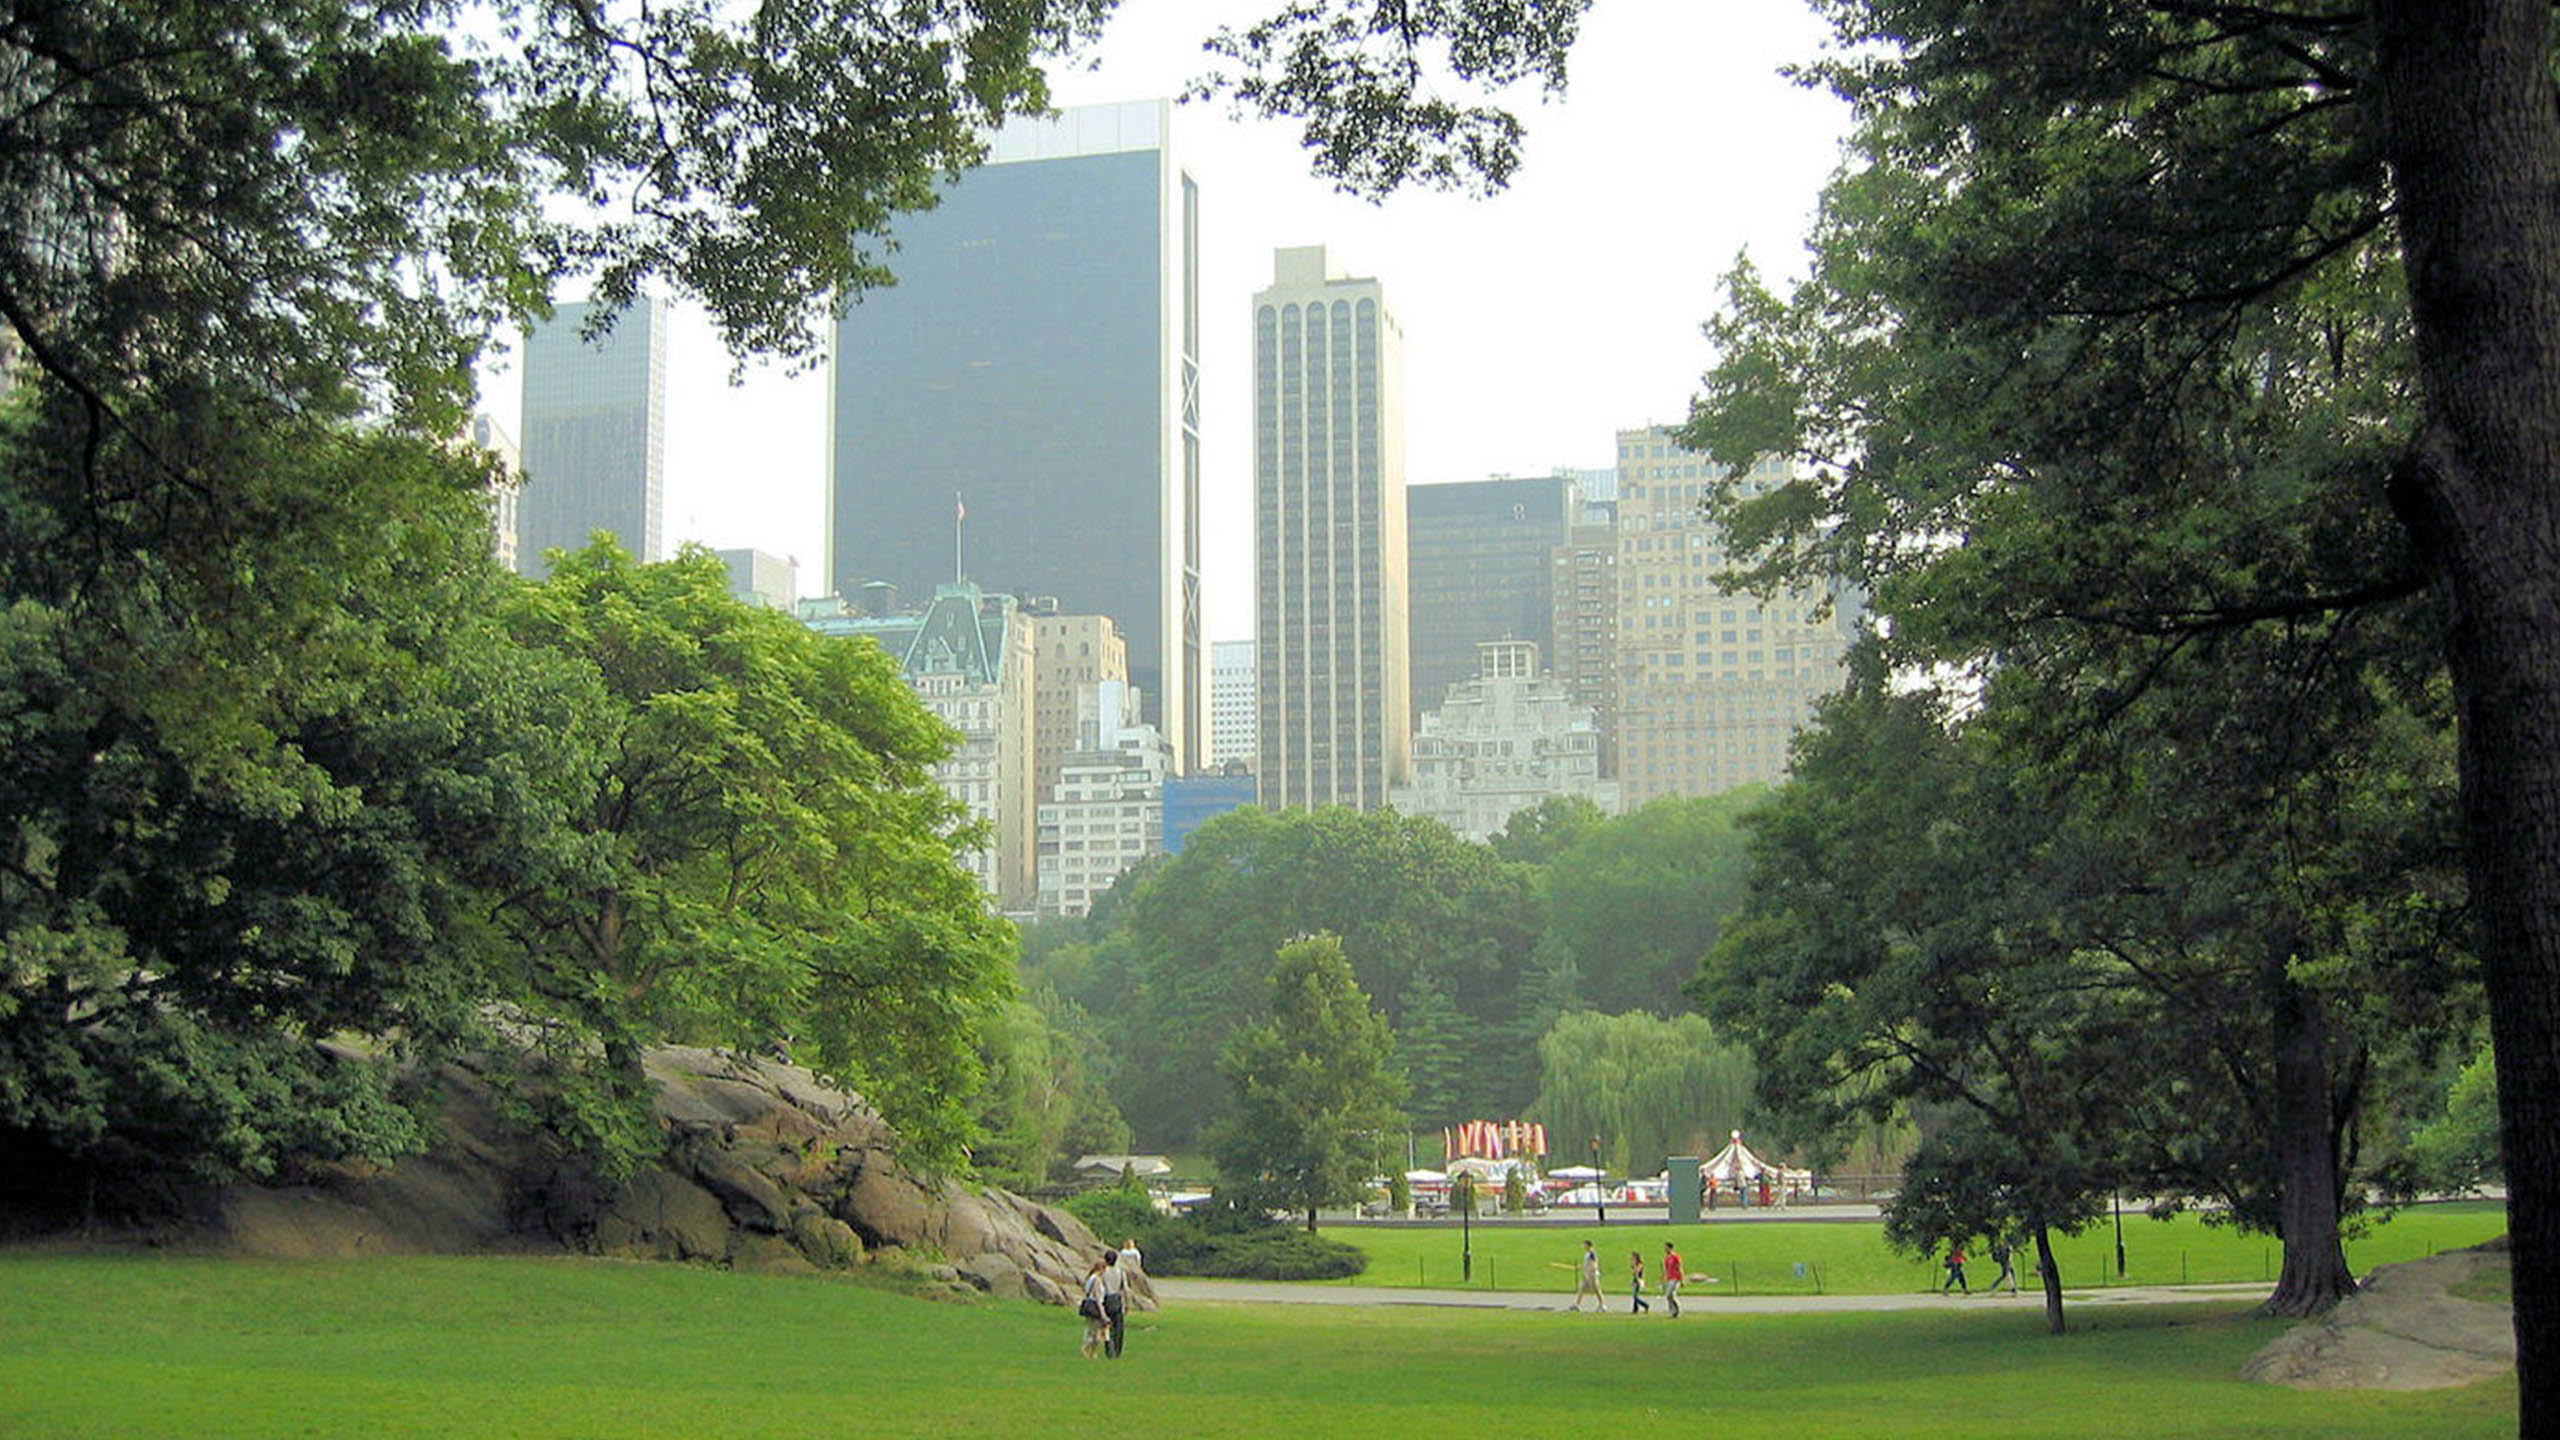 My new park. Центральный парк Нью-Йорк. Америка Центральный парк Нью-Йорк. Грин парк Нью Йорк. Централ парк США.